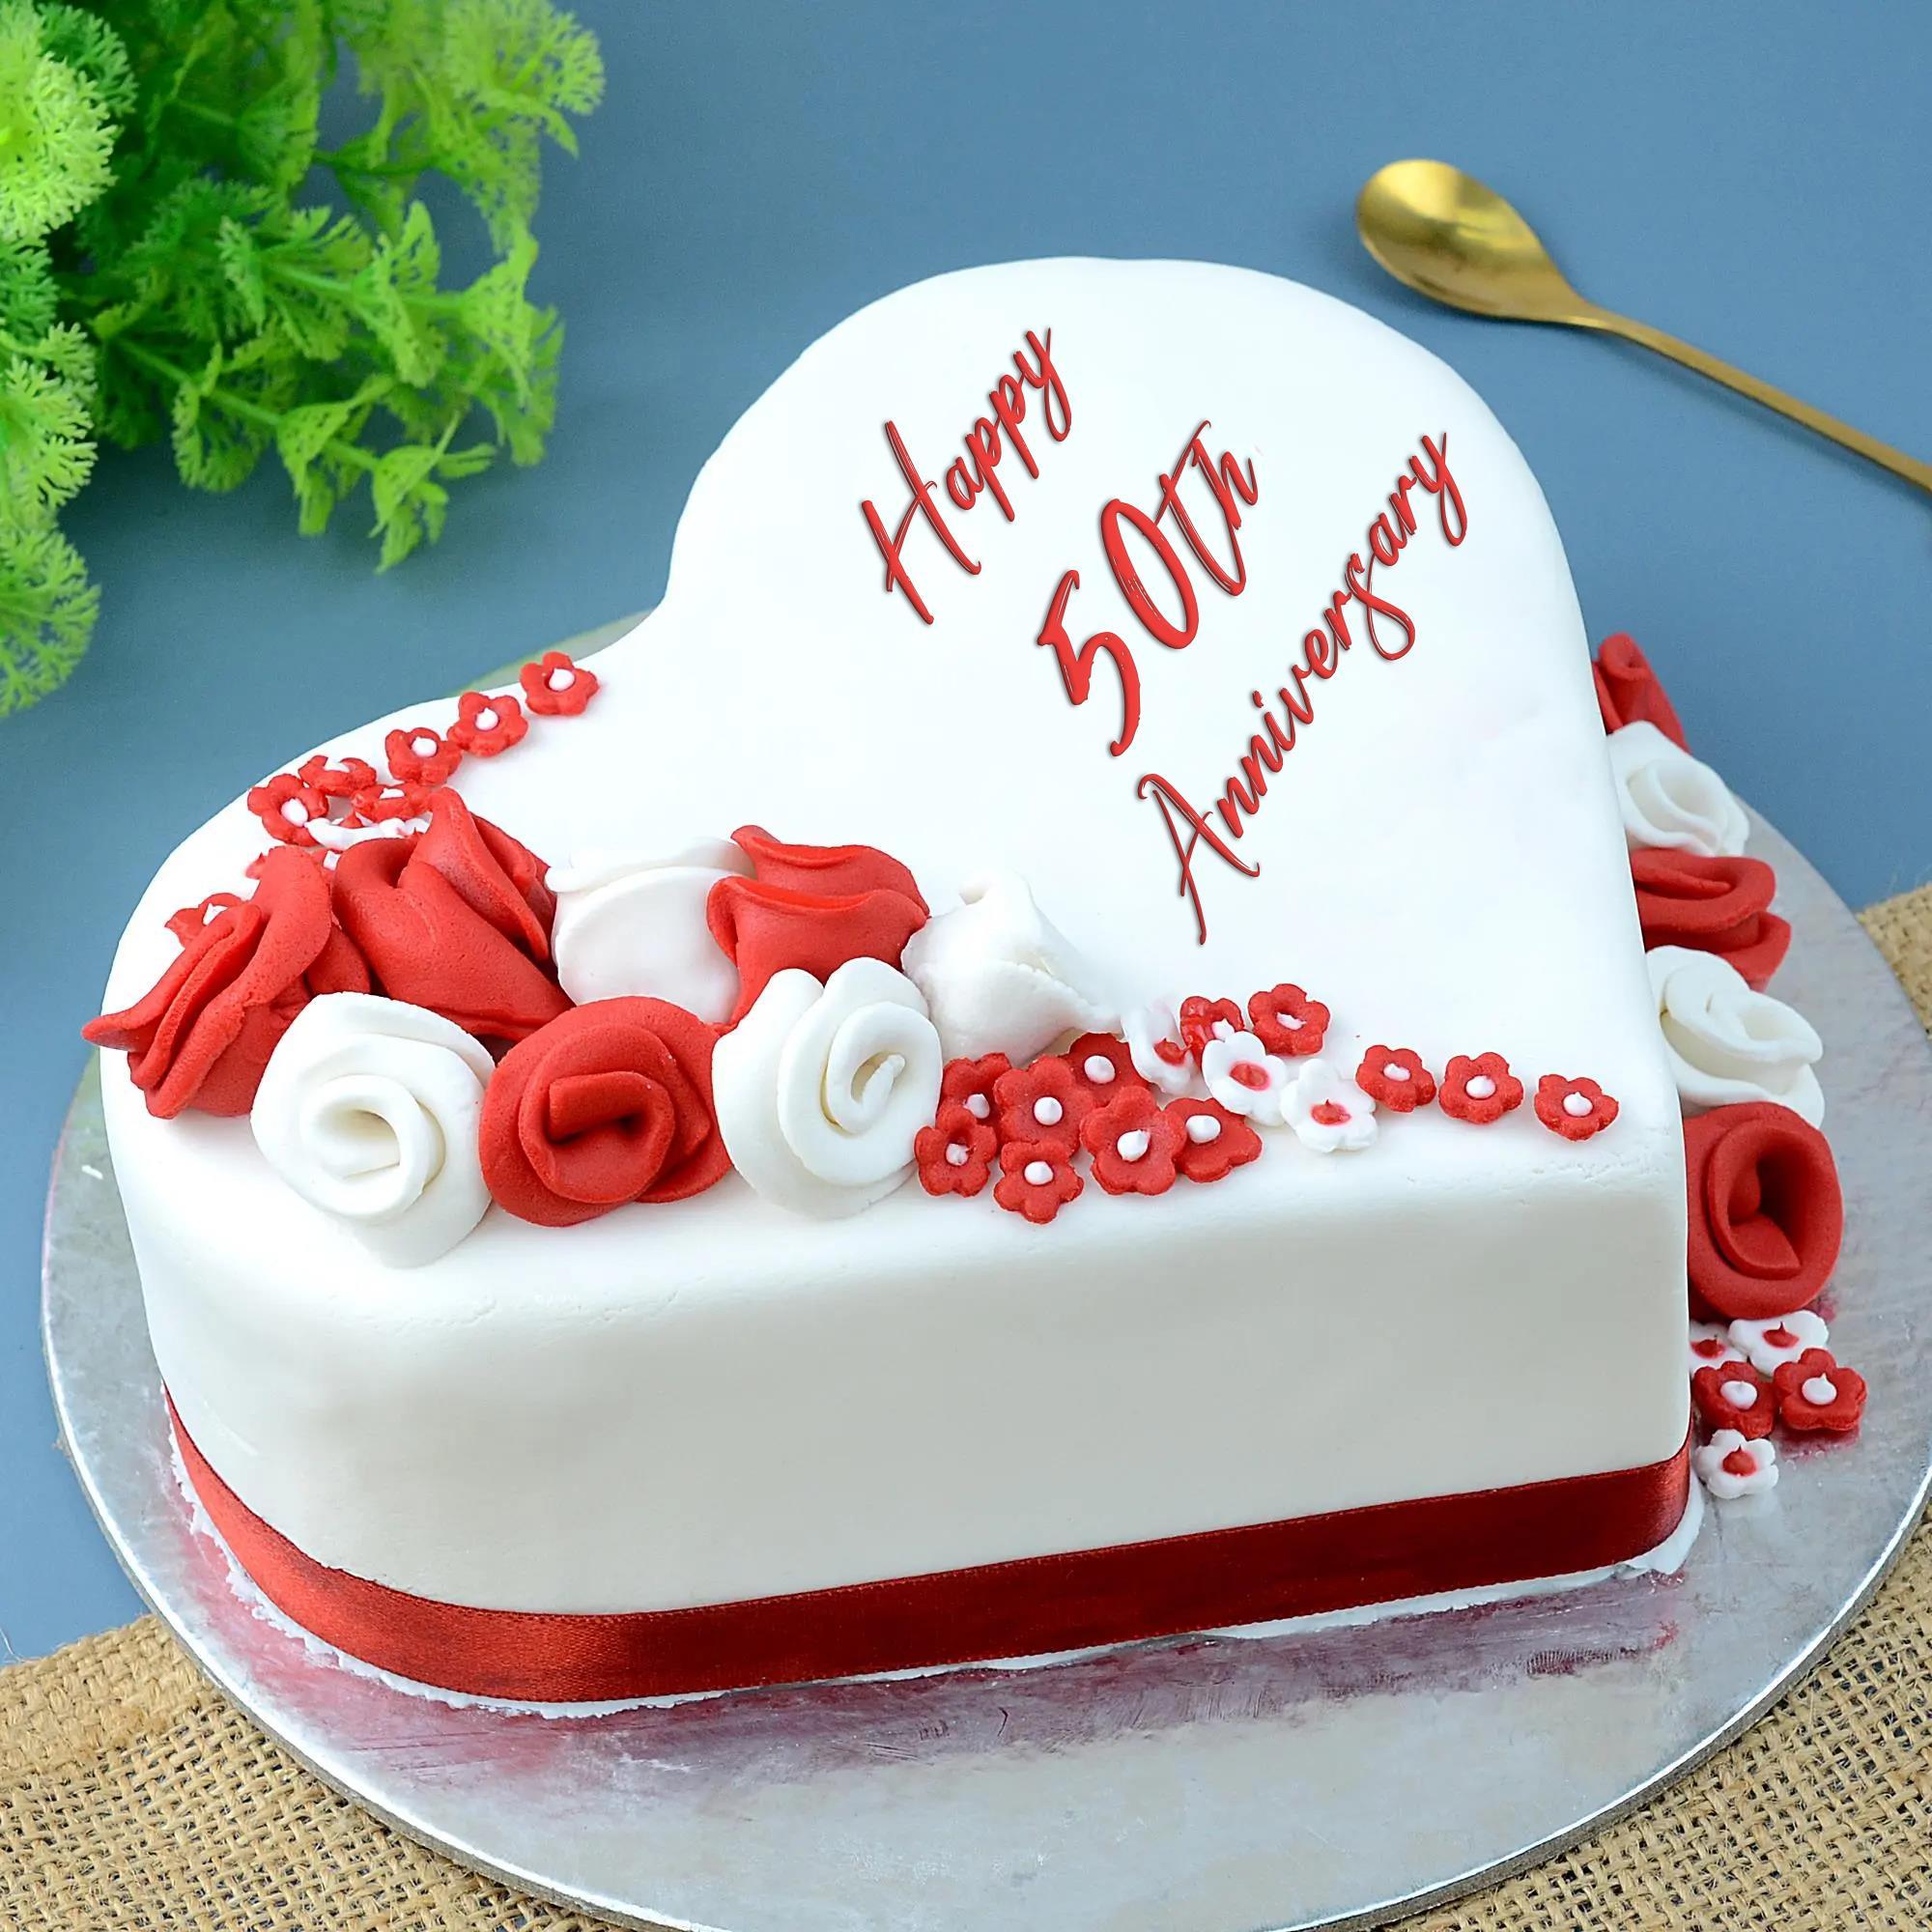 50th birthday fondant cake | Fondant cakes, Cupcake cakes, Cake creations